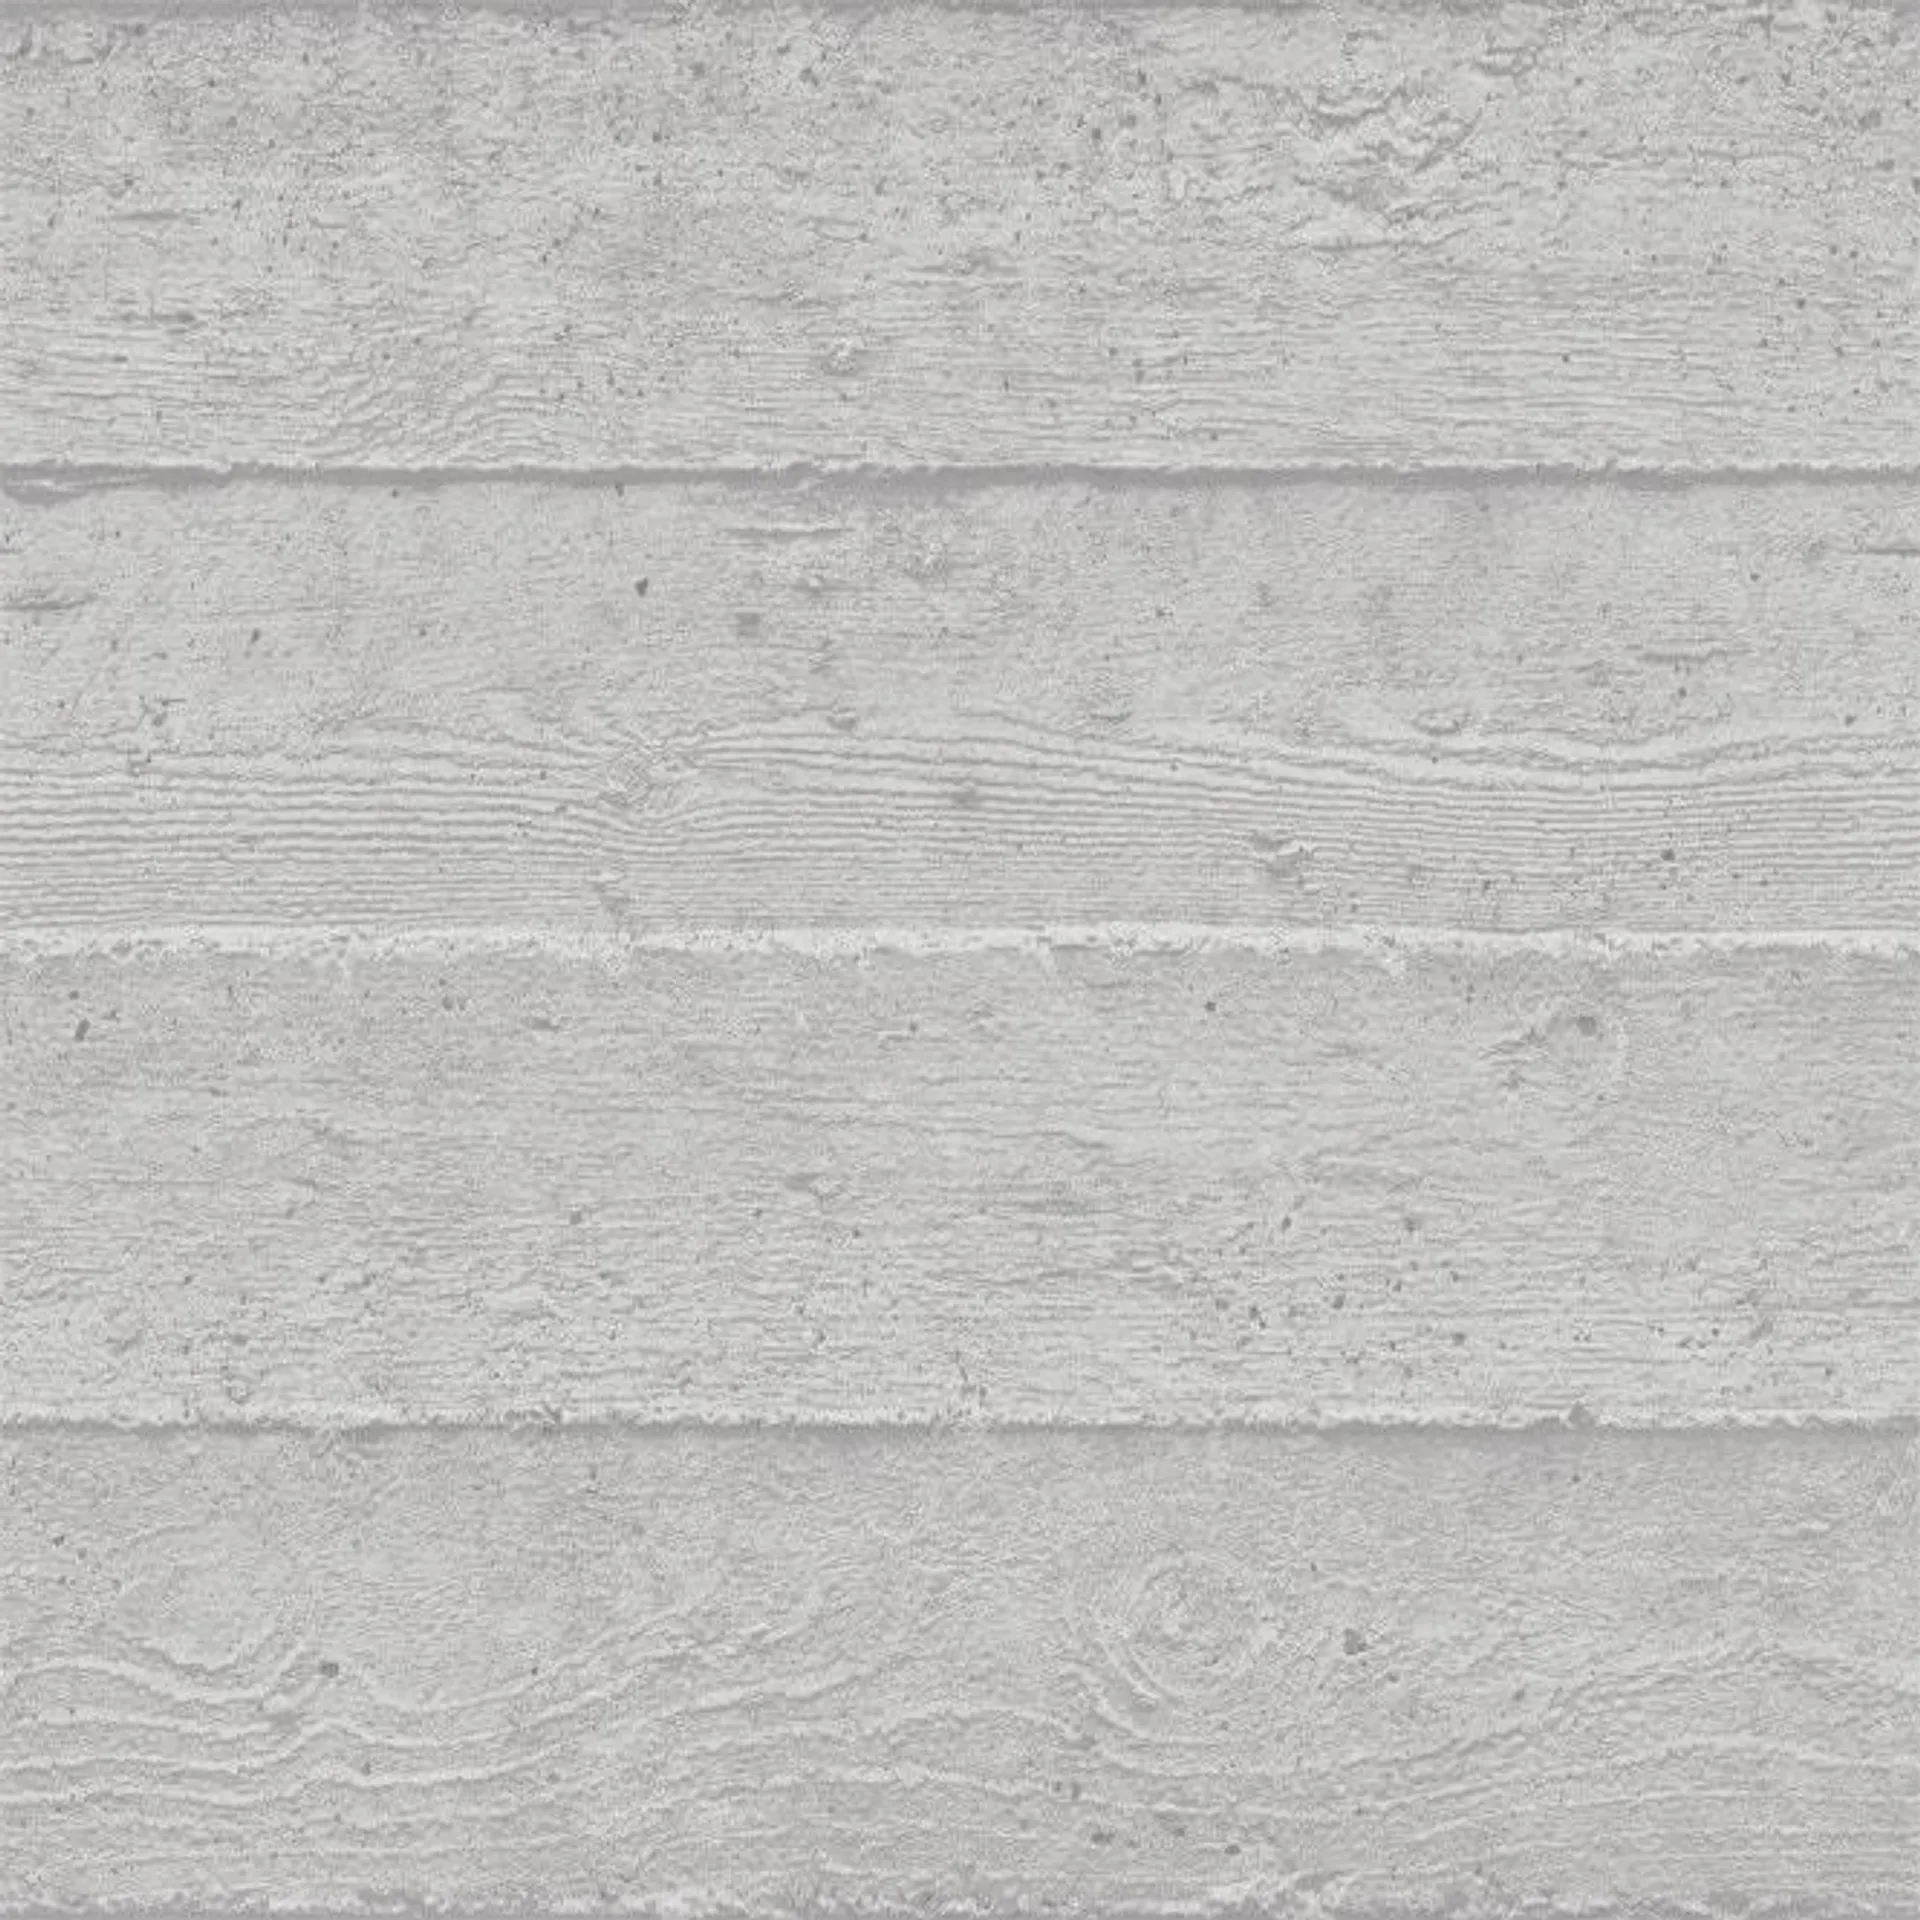 Stonewood wallpaper in grey